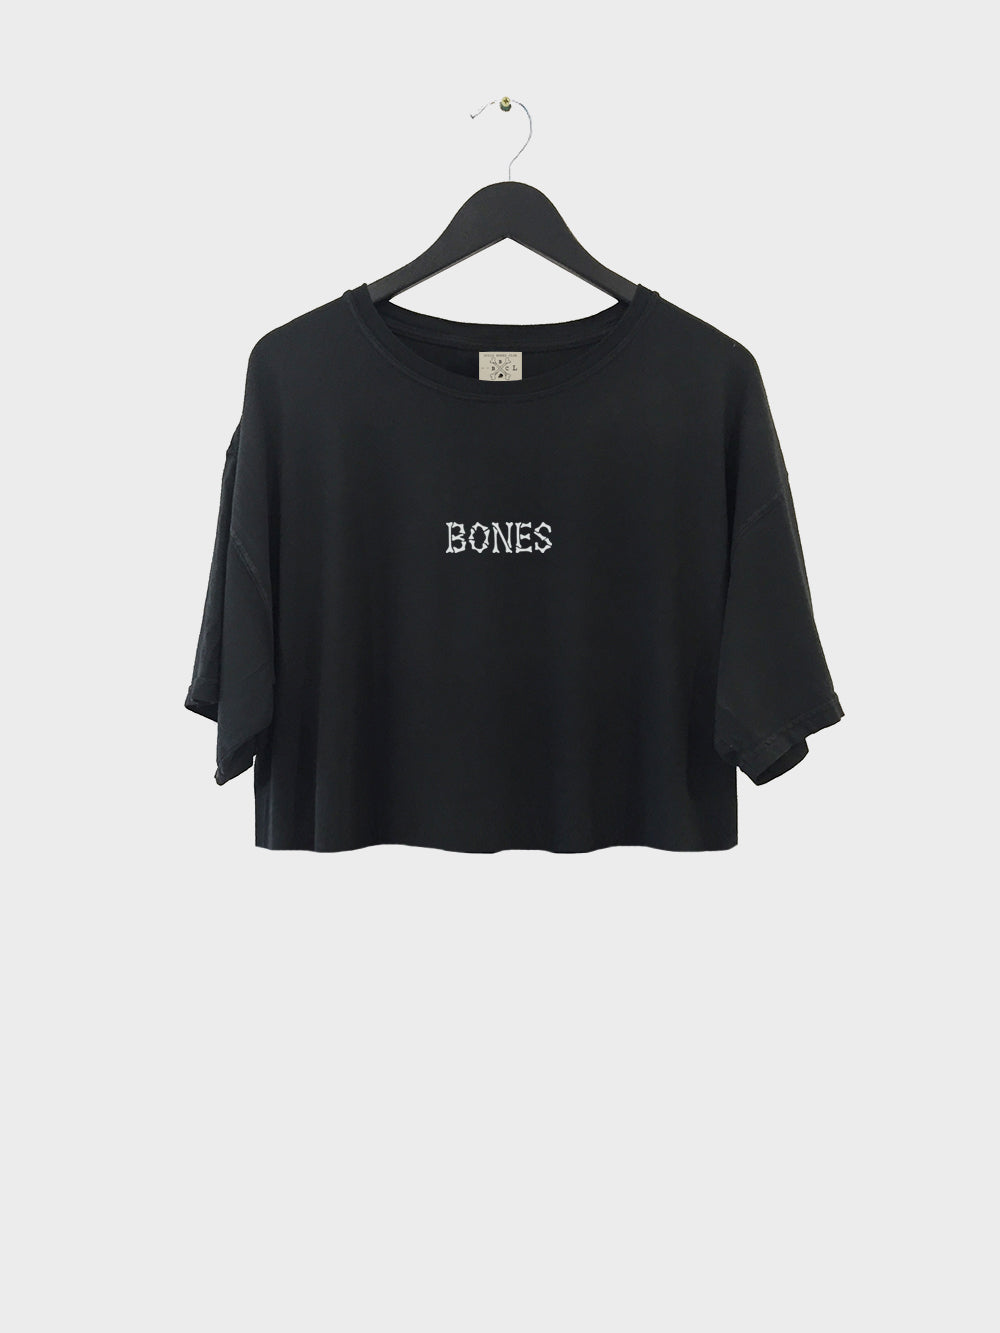 Bones Club Crop - Black